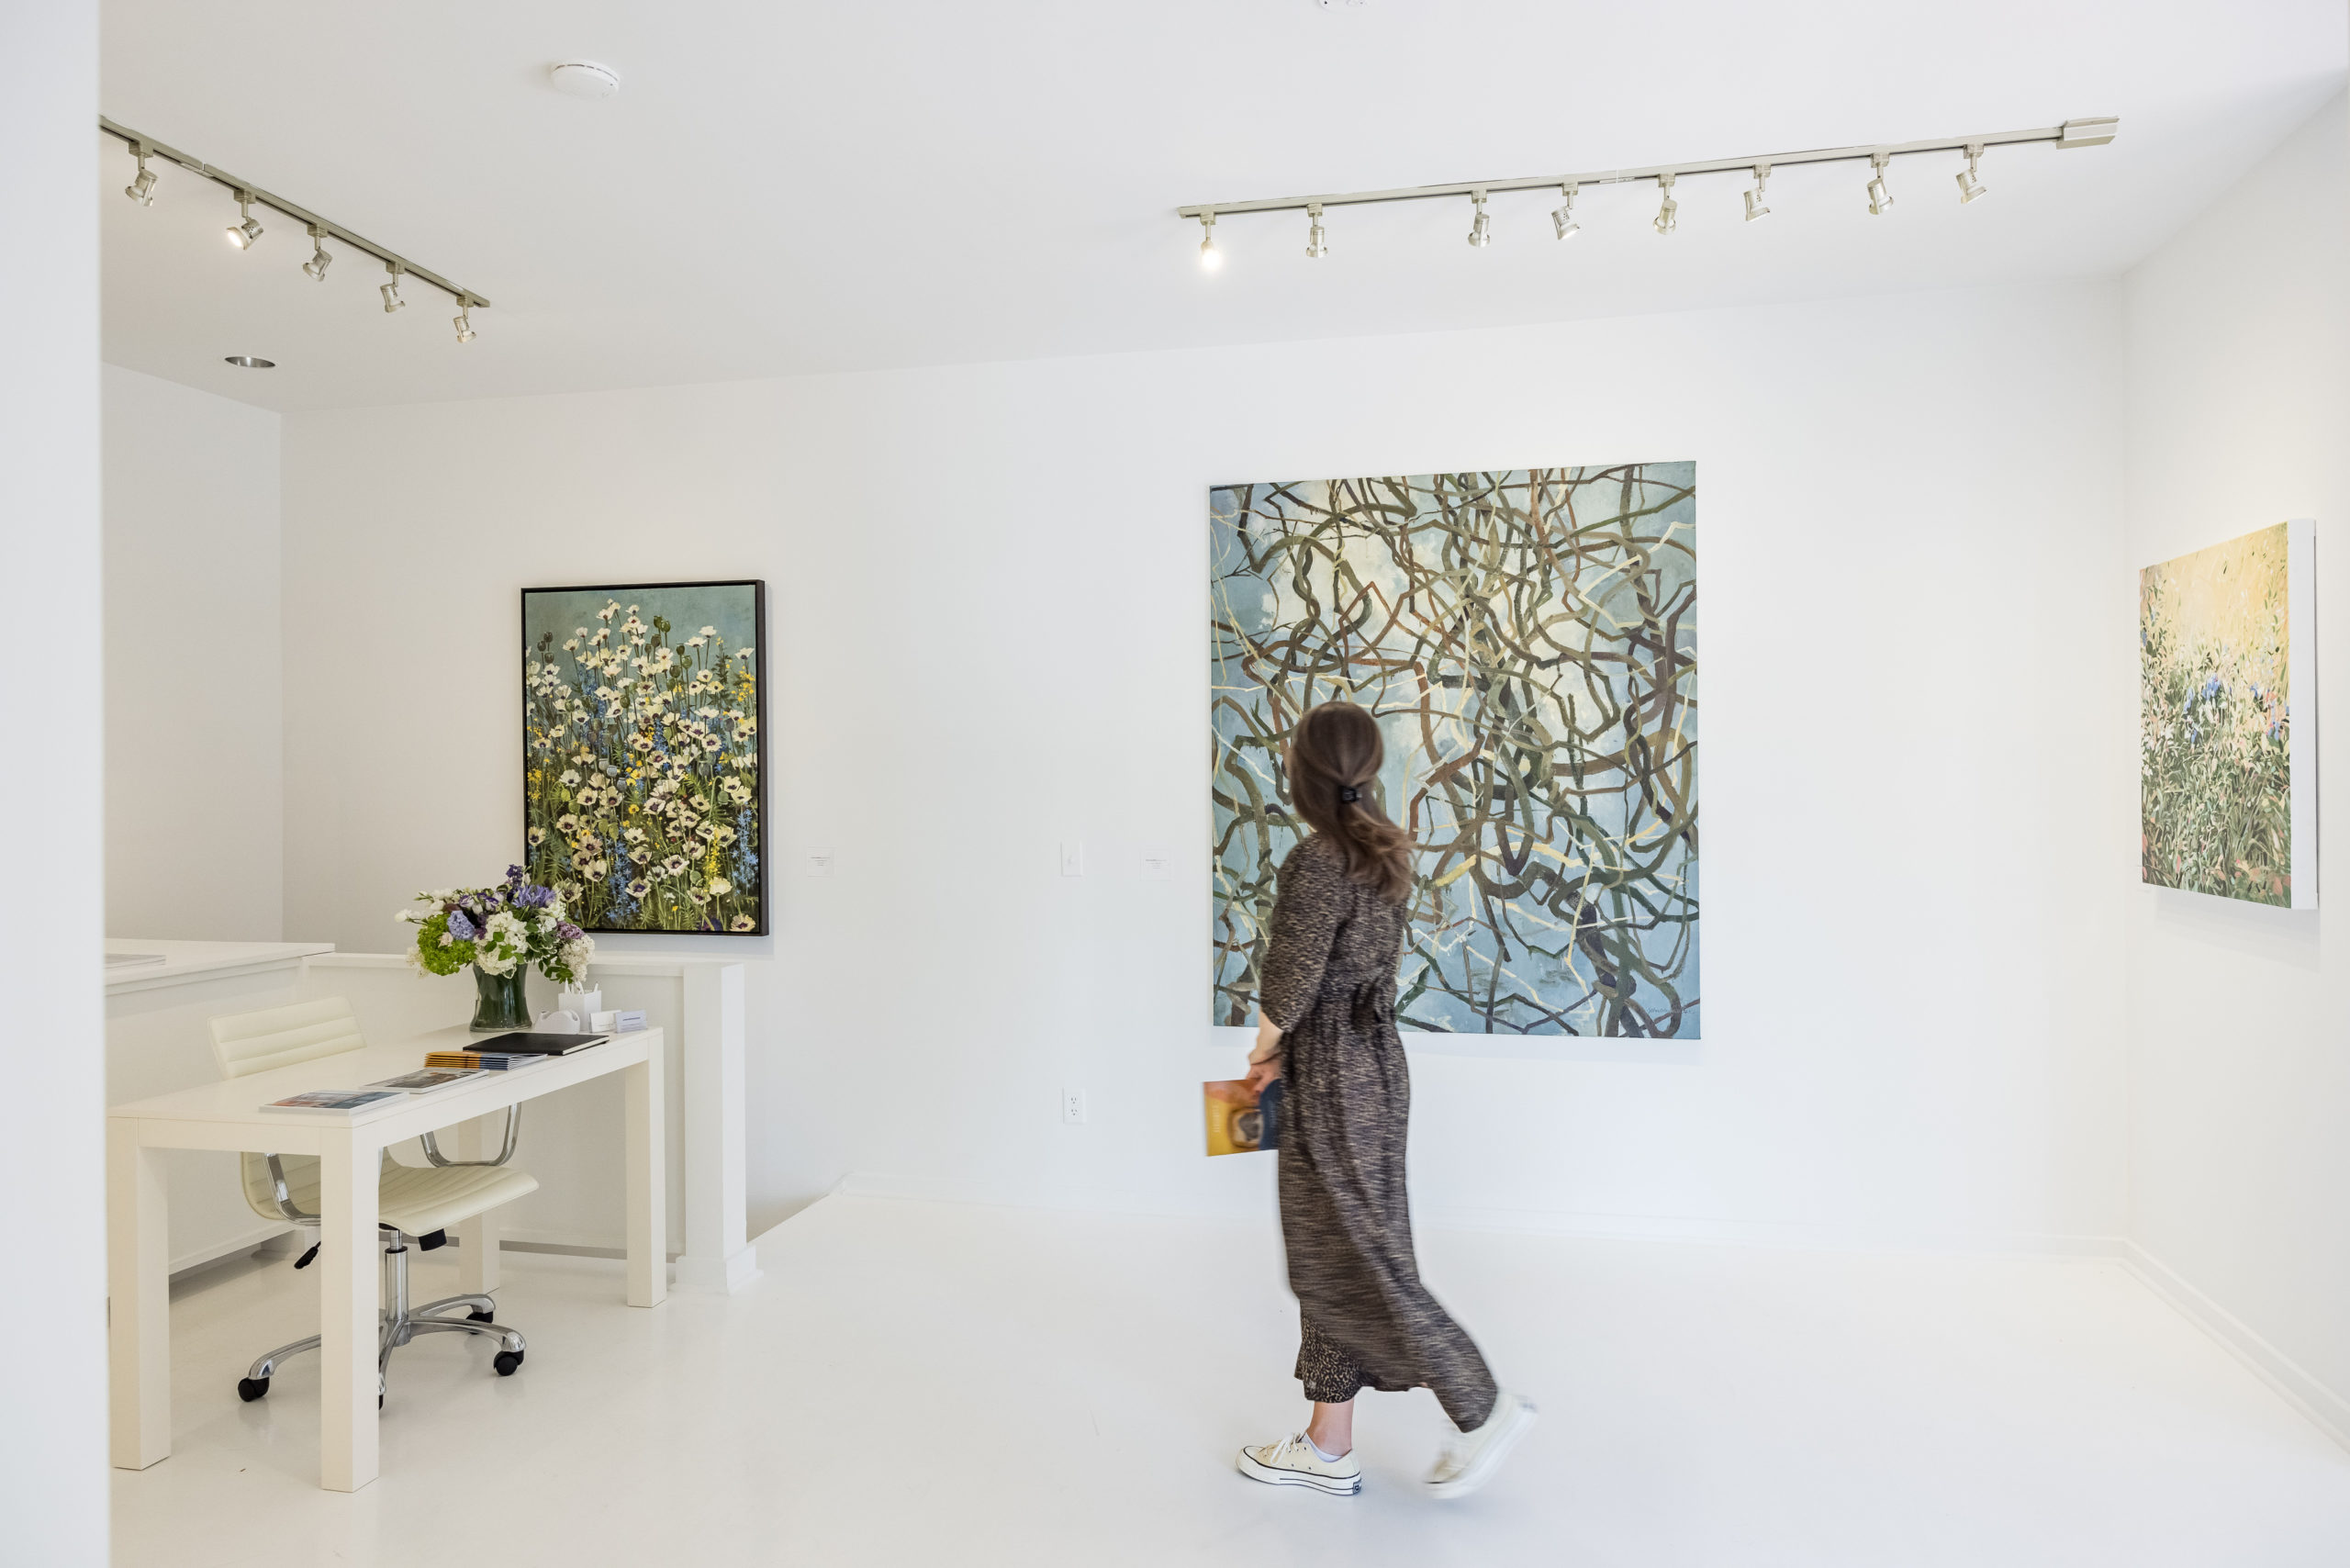 Berggruen Gallery has popped-up for the 2021 summer season in East Hampton Village.